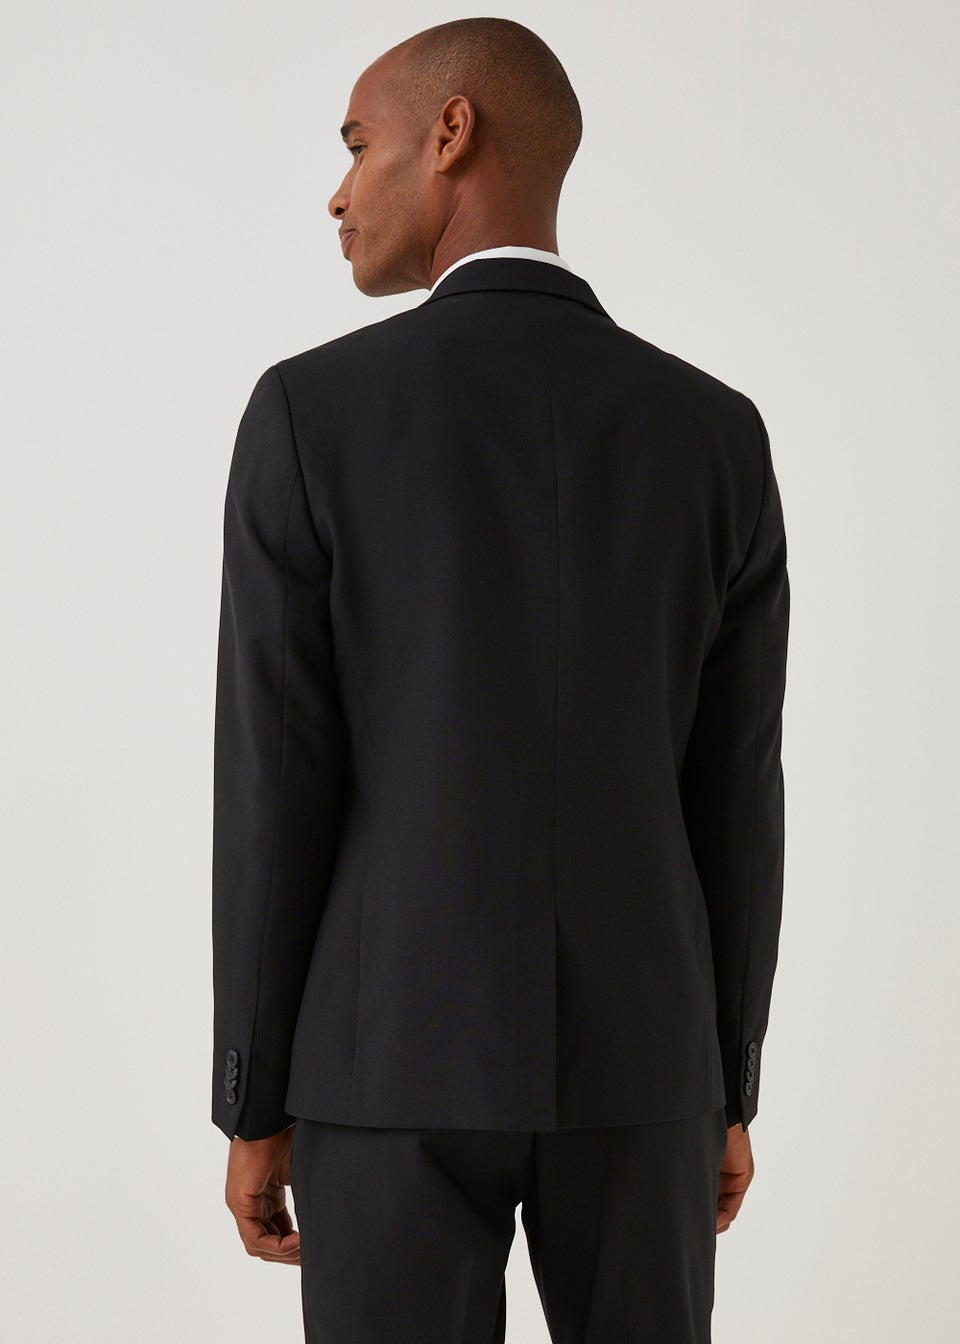 Taylor & Wright Panama Black Skinny Fit Suit Jacket - Matalan